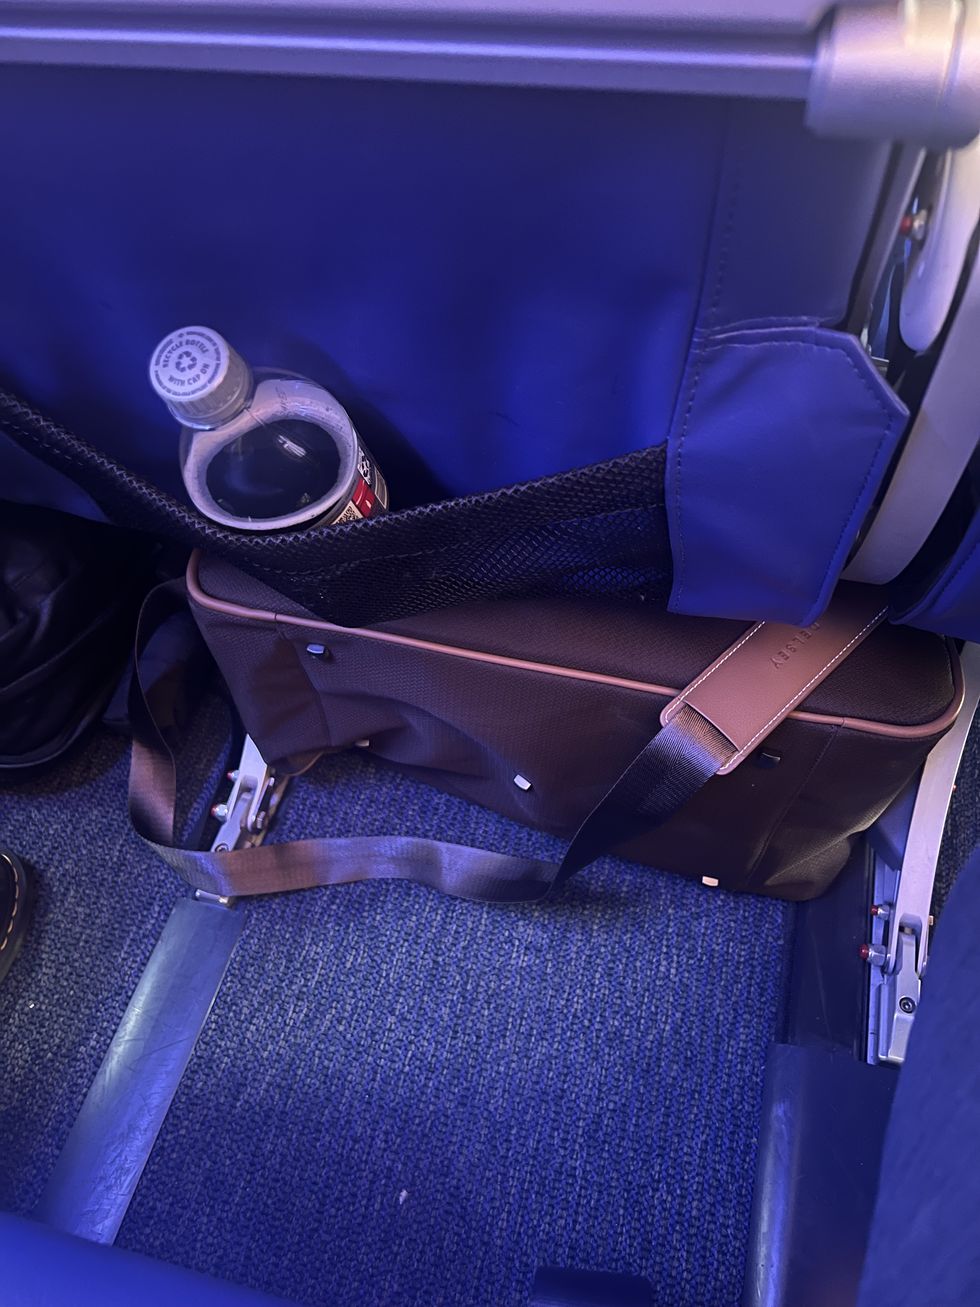 a bag under an airplane seat